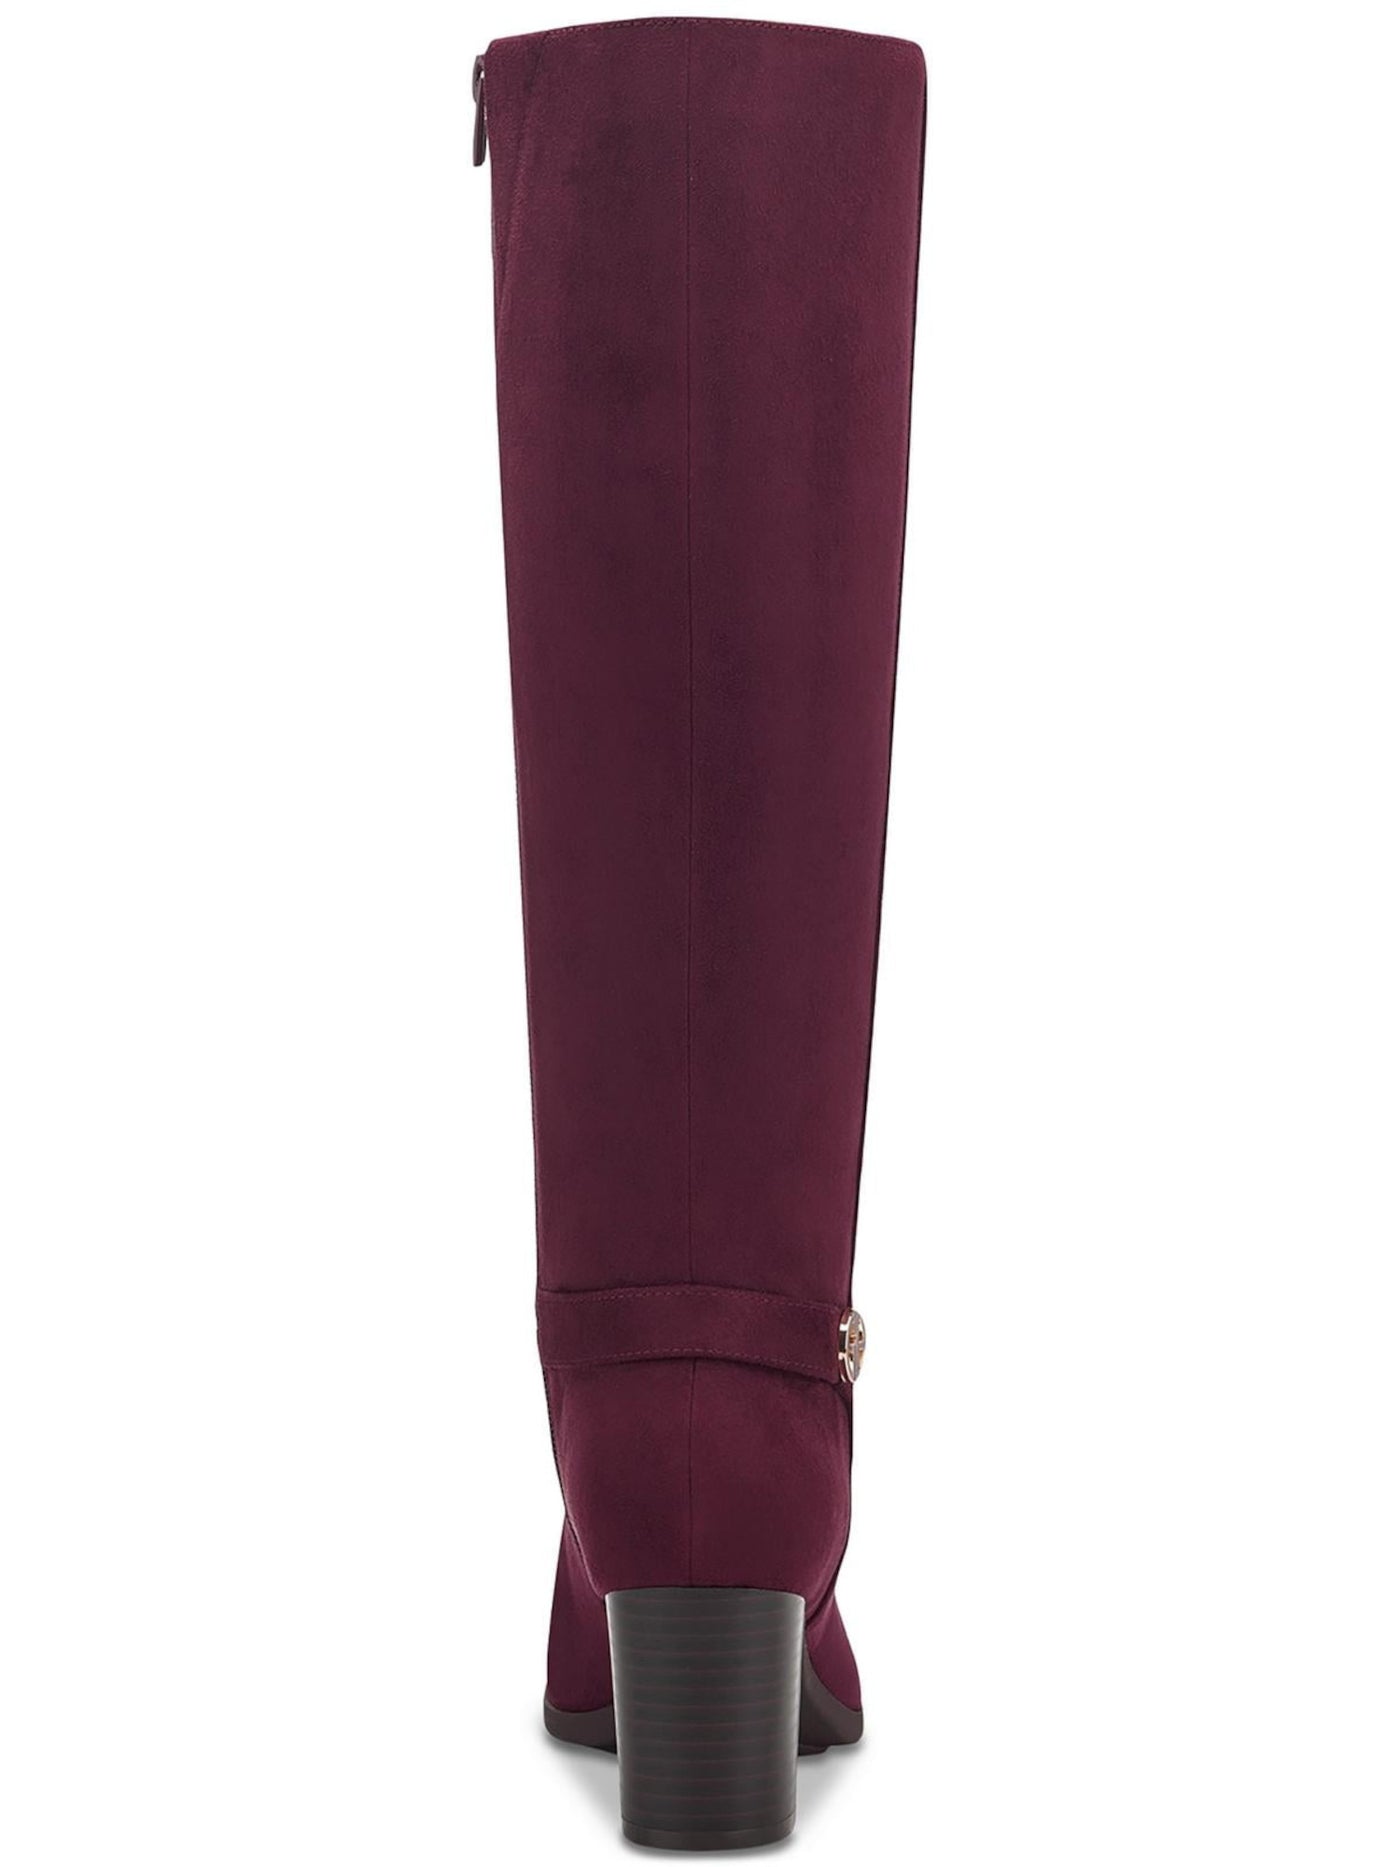 GIANI BERNINI Womens Burgundy Slip Resistant Goring Adonnys Round Toe Block Heel Zip-Up Heeled Boots 11 M